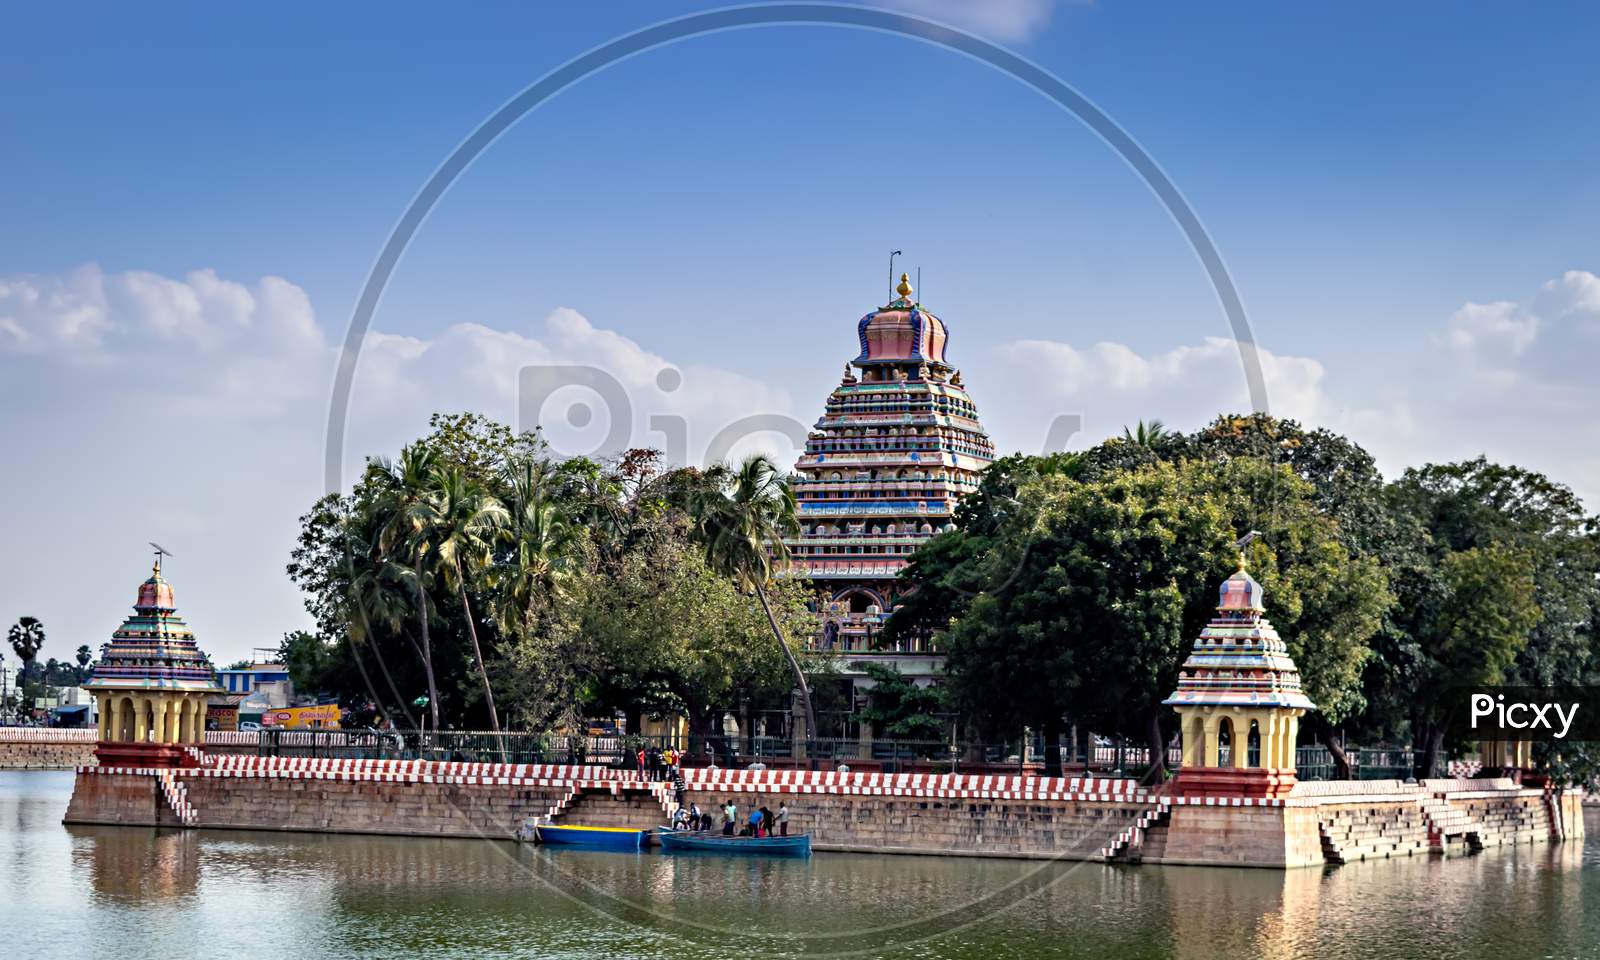 Vandiyur Mariamman Temple Located Inside A Lake In Madurai, India.